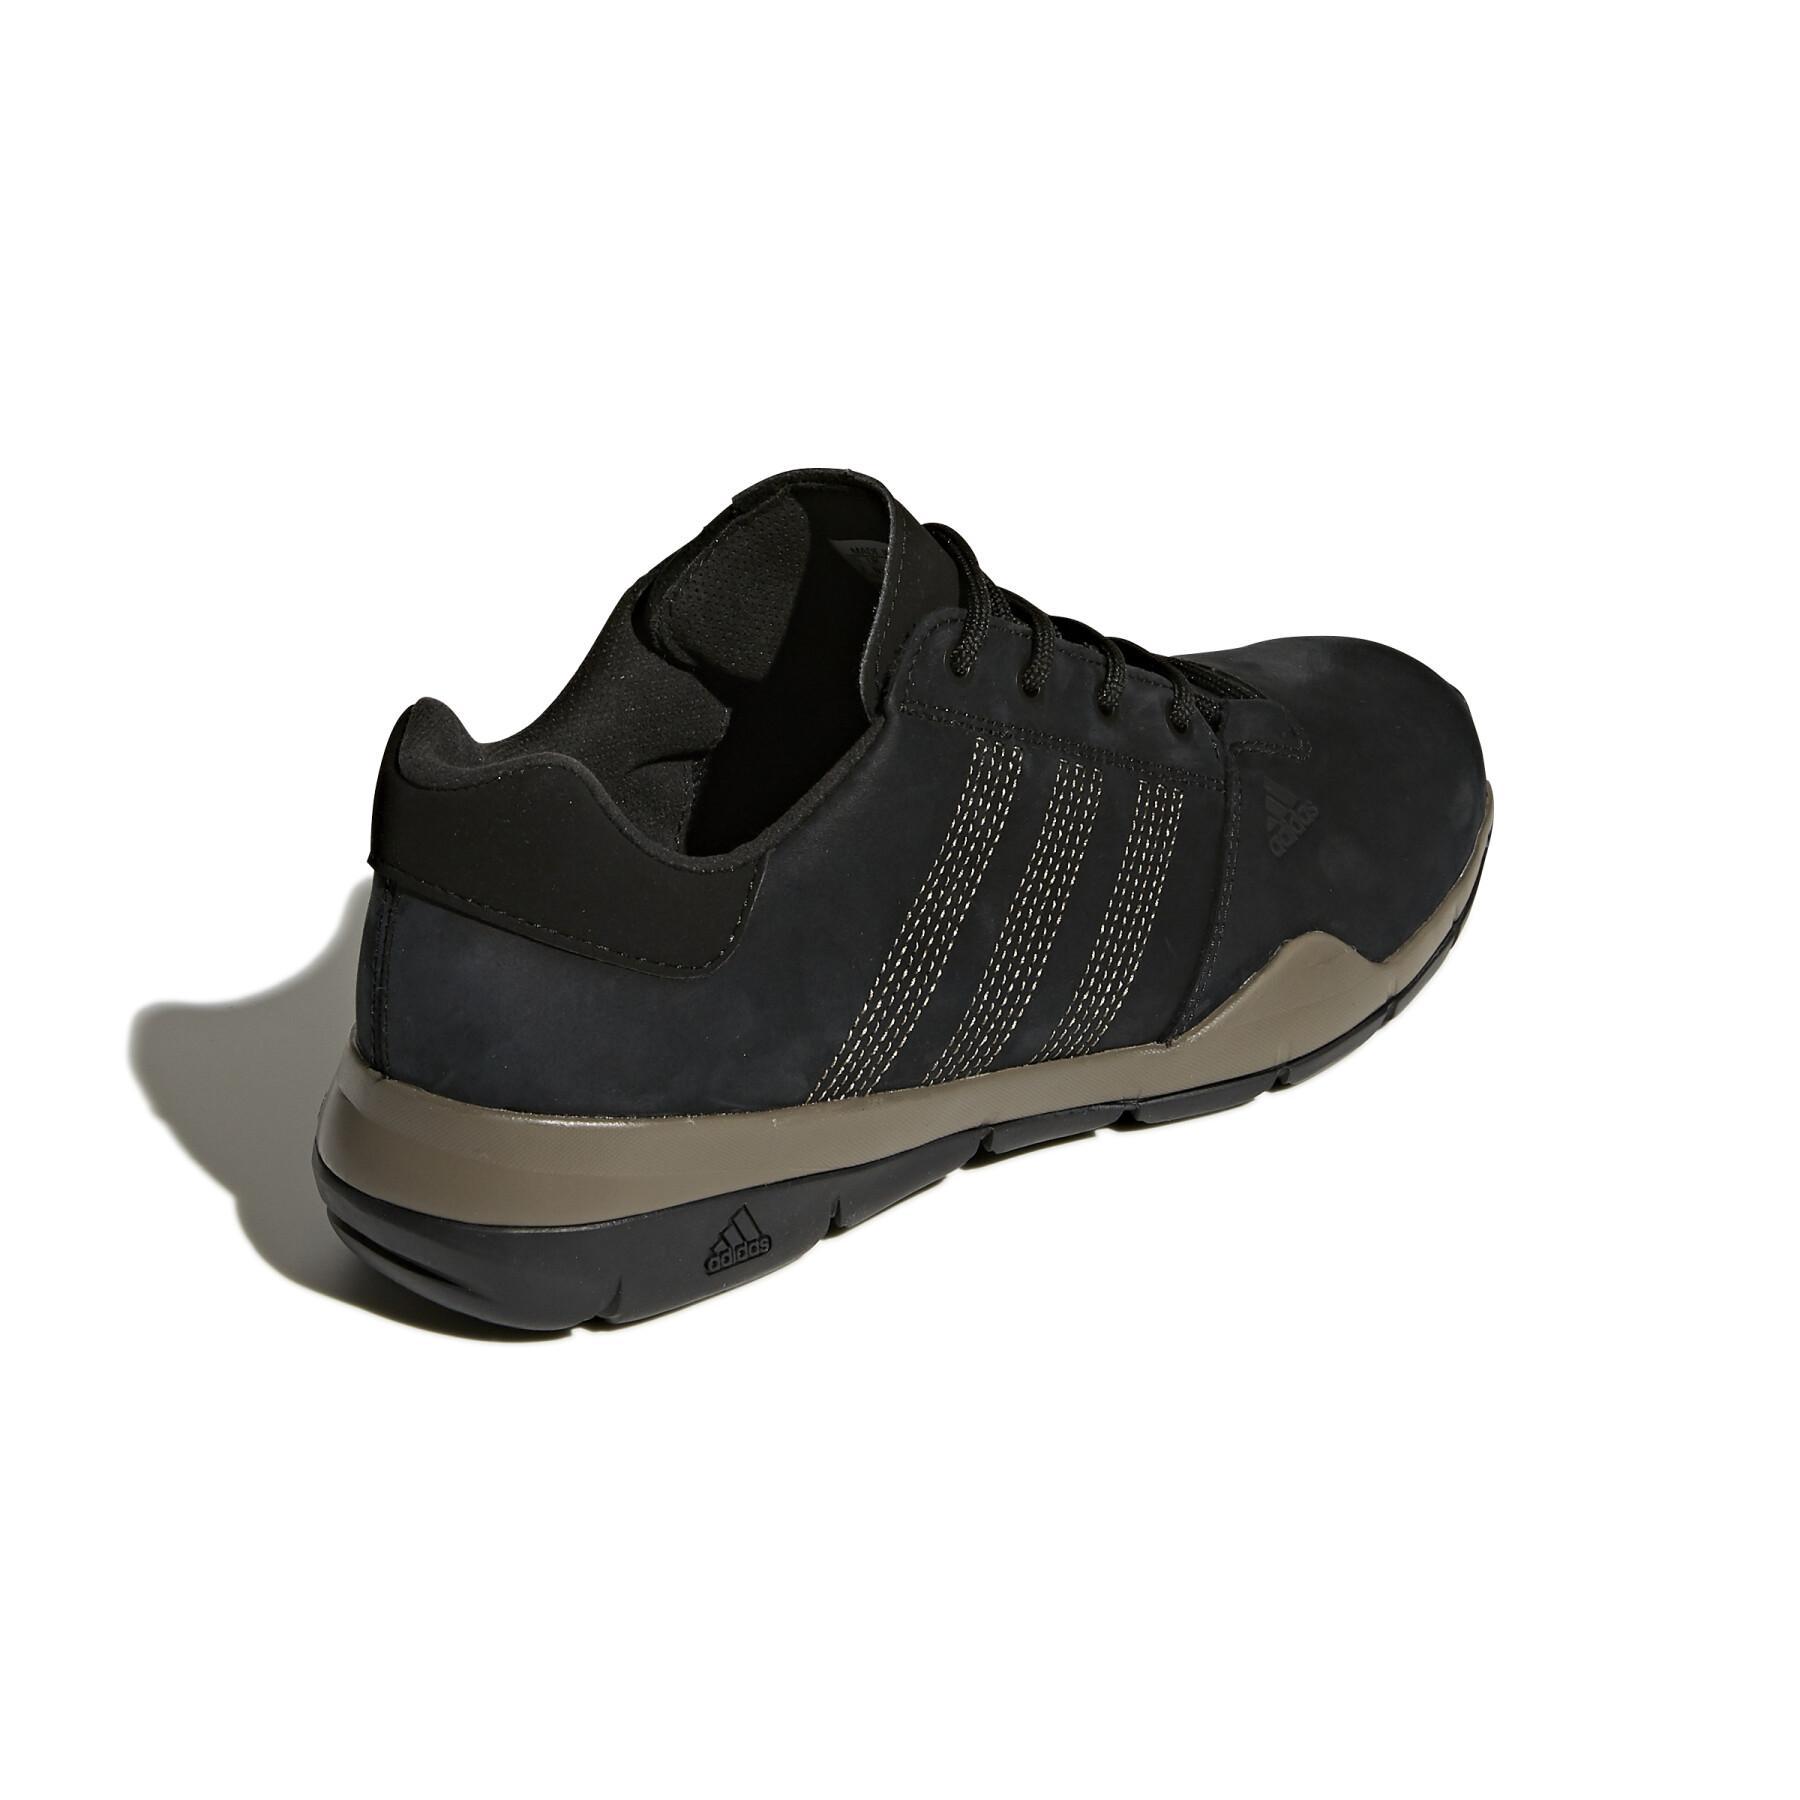 Hiking shoes adidas Anzit DLX